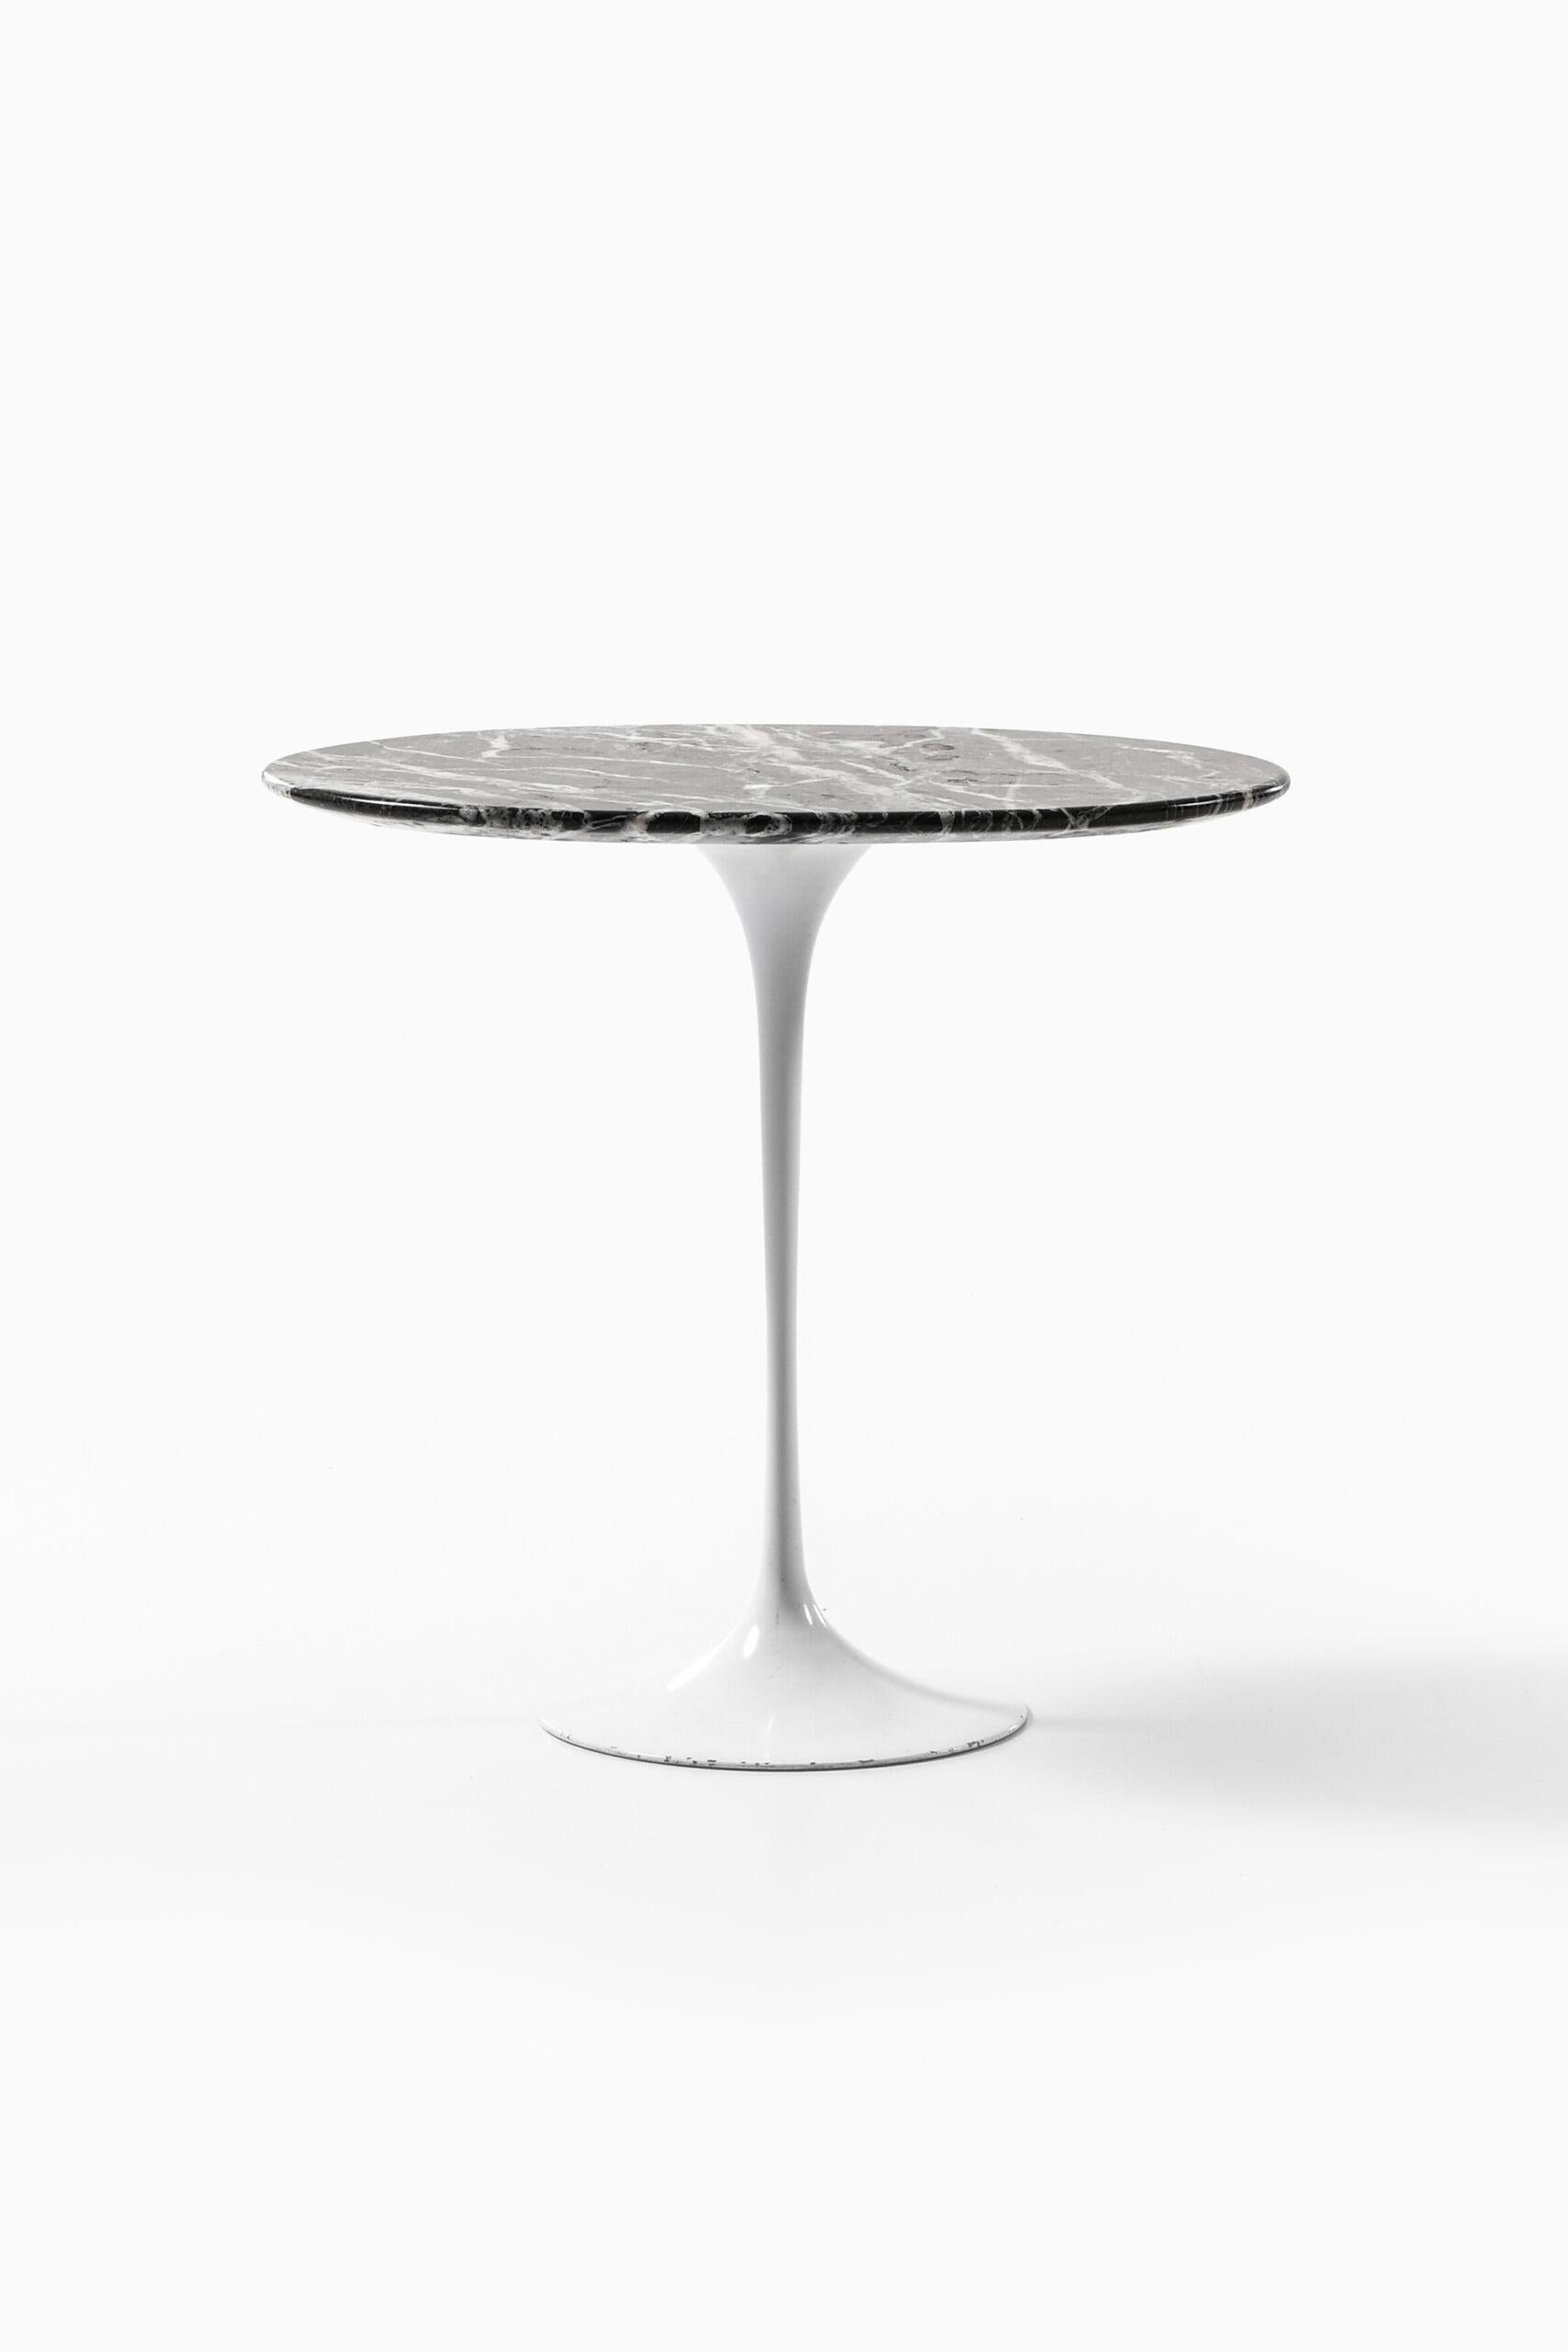 Mid-20th Century Eero Saarinen Side Table Produced by Knoll International For Sale